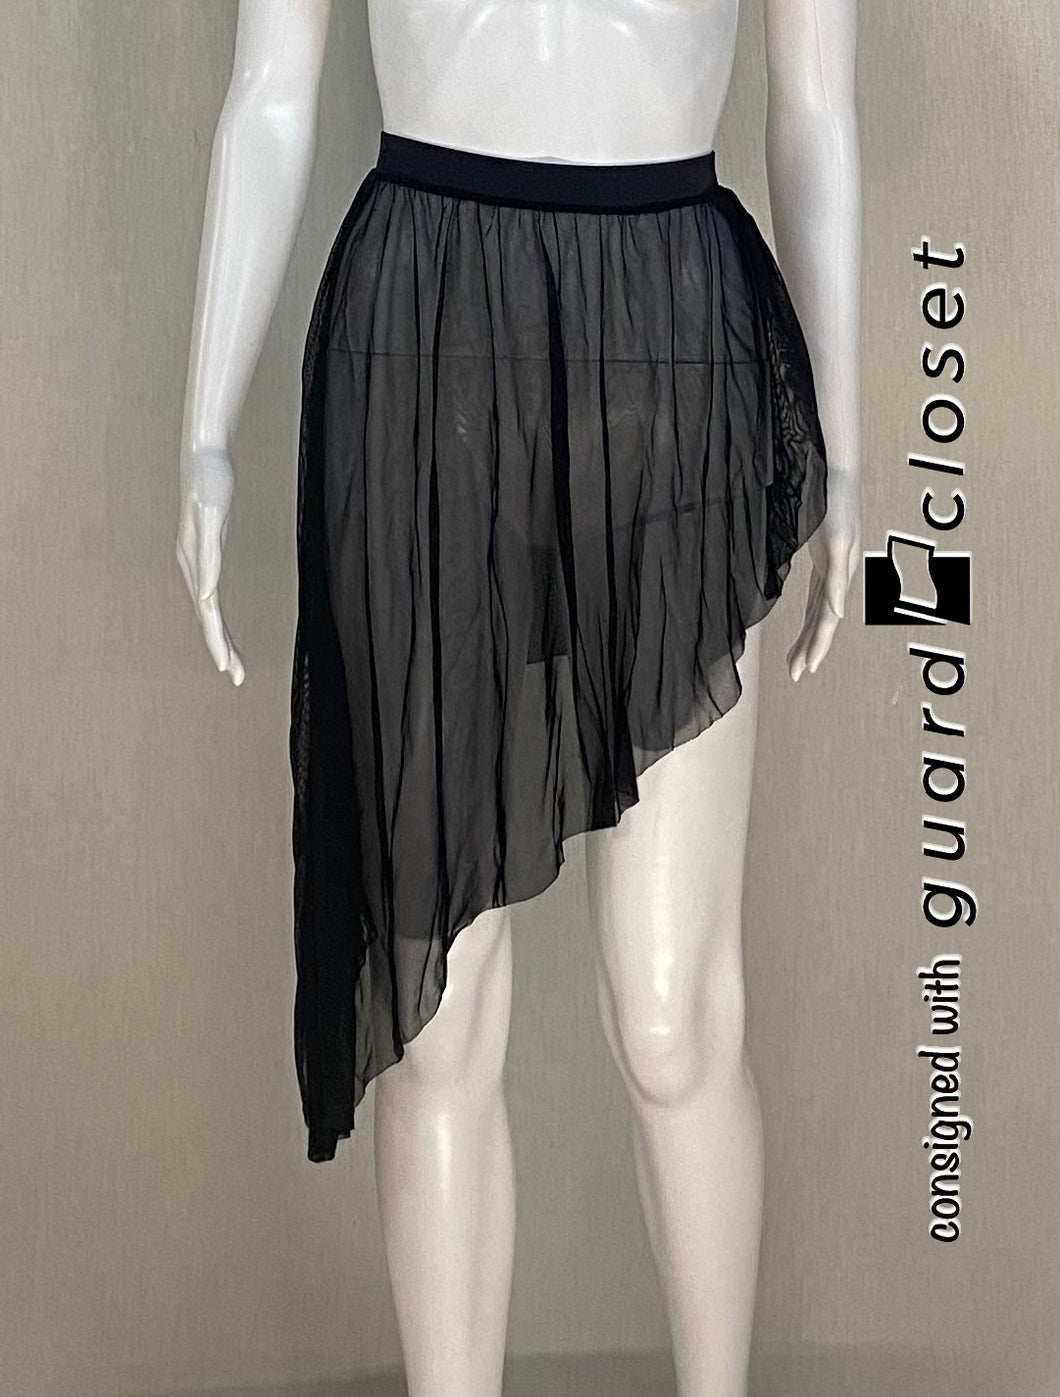 19 solid black asymmetrical skirts